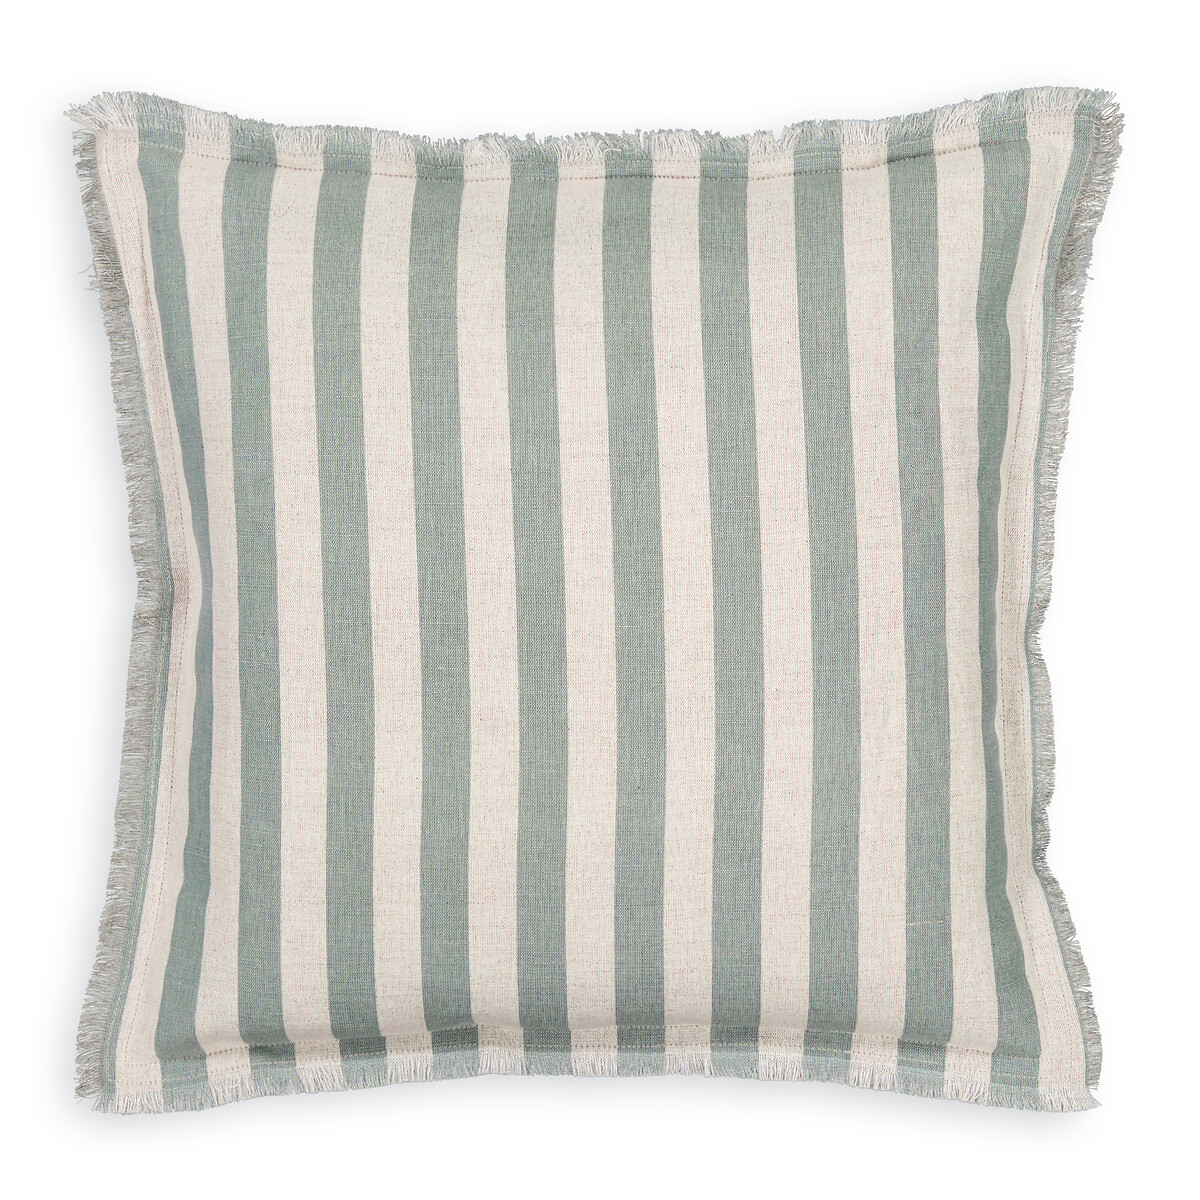 Octavine 40 x 40cm Striped Fringed Linen/Cotton Cushion Cover